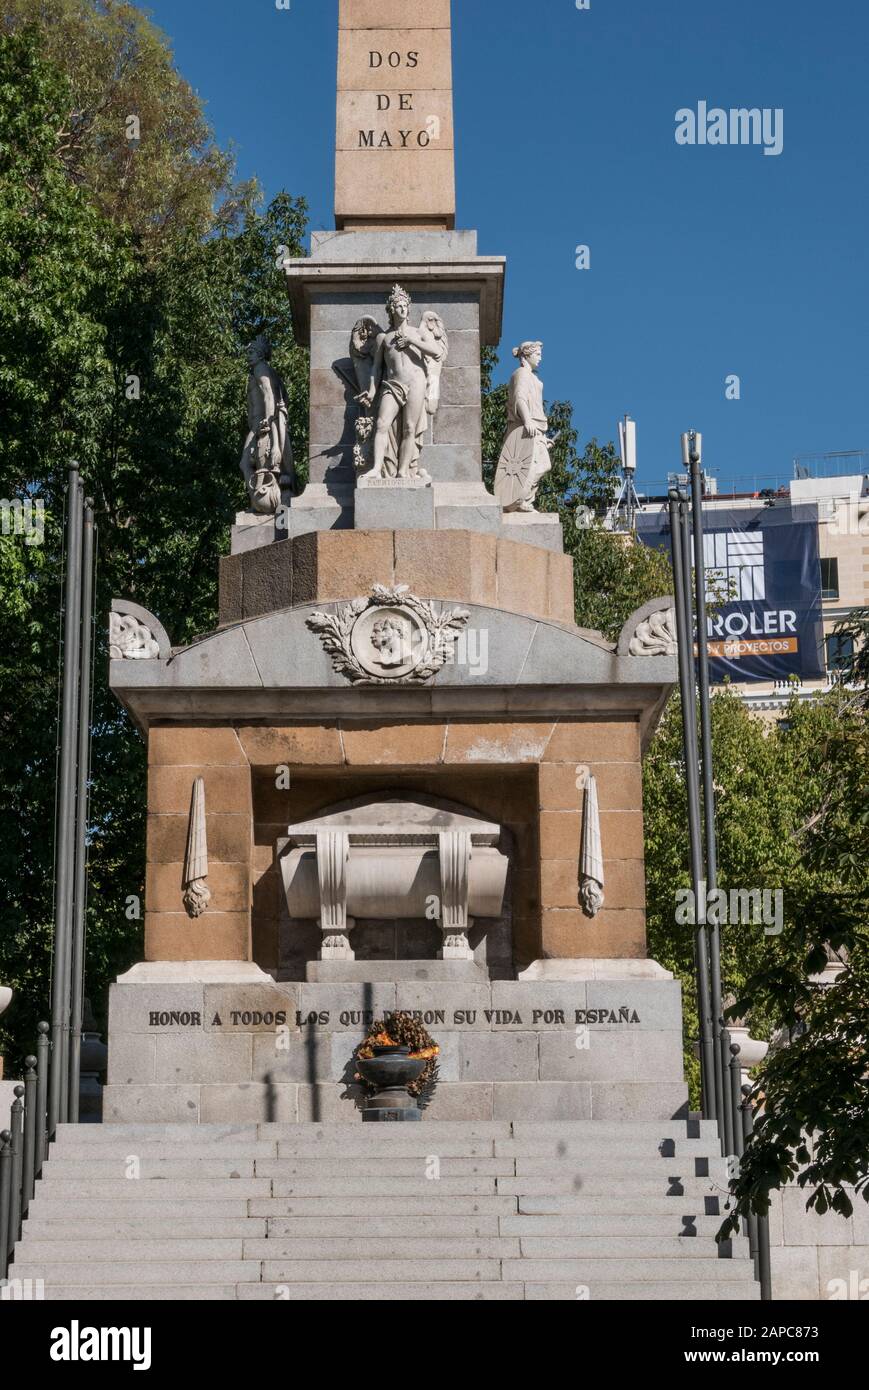 Monumento dos de Mayo, Madrid, España Foto de stock